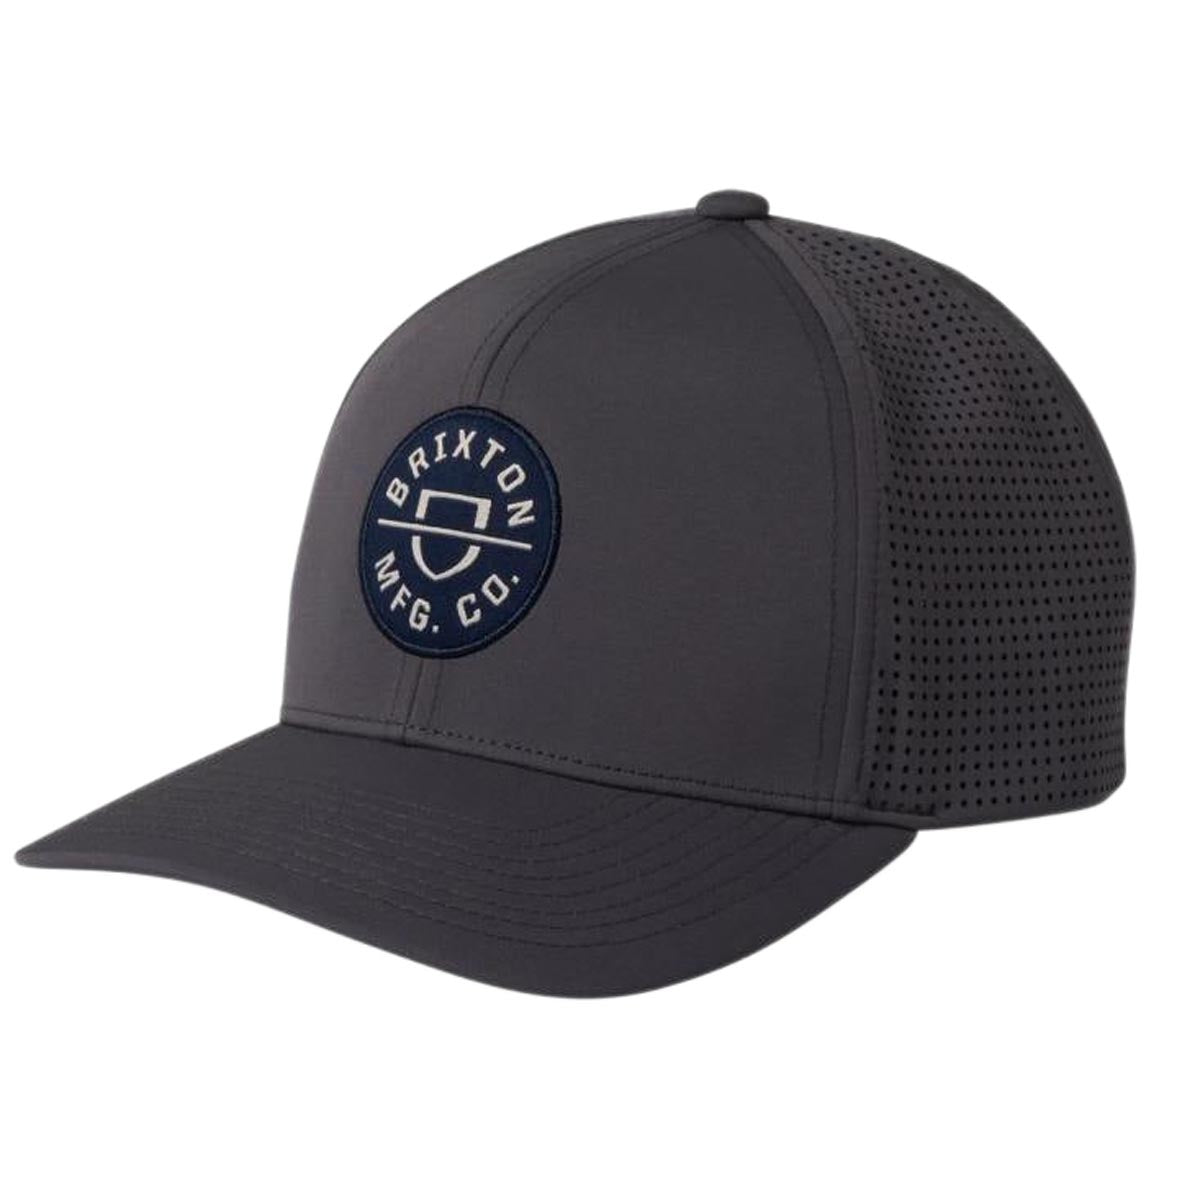 Brixton Crest X Mp Snapback Hat - Charcoal/Navy image 1